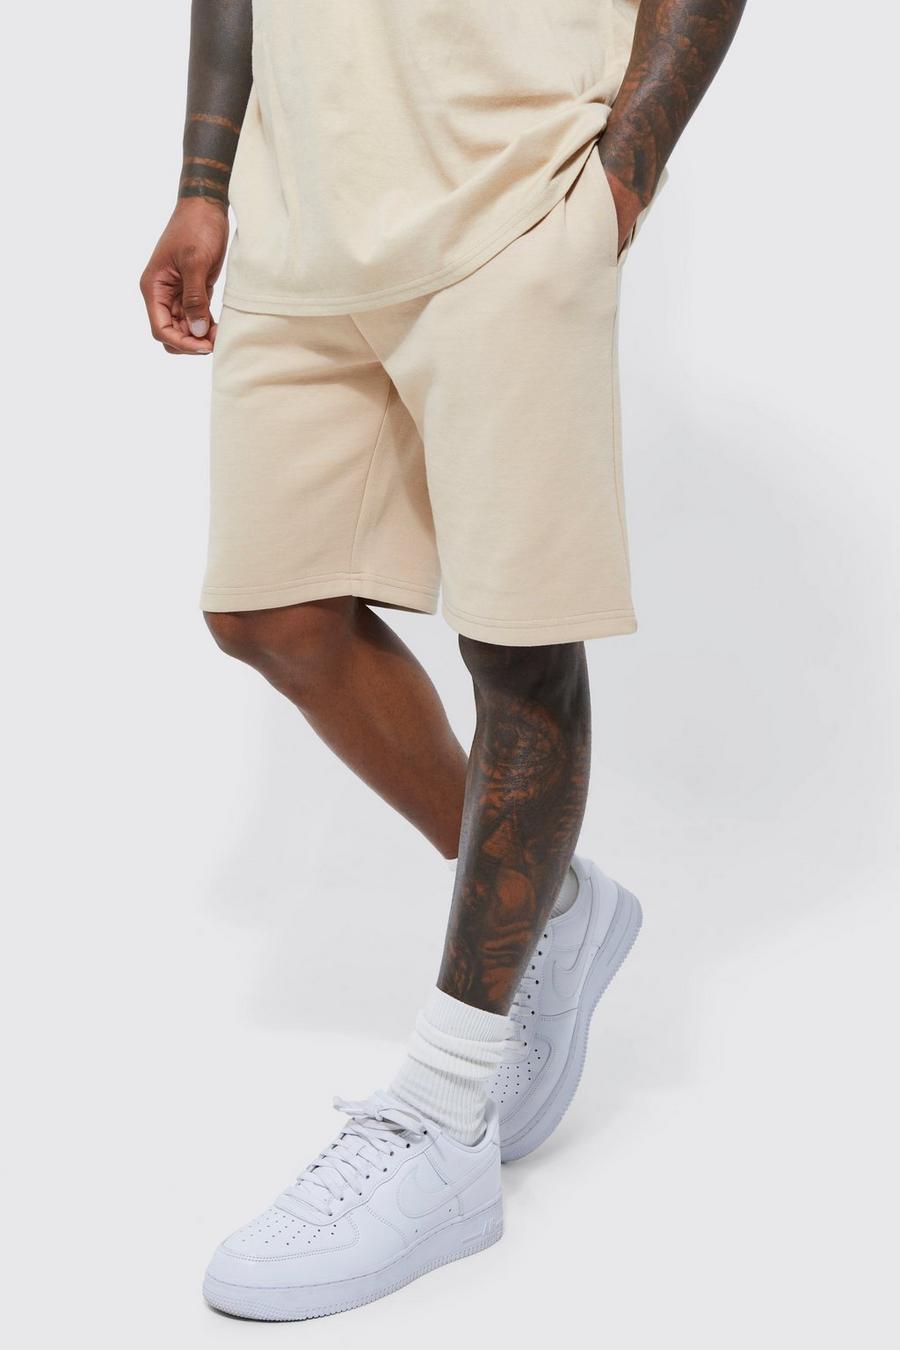 Lockere mittellange Basic Shorts, Stone beige